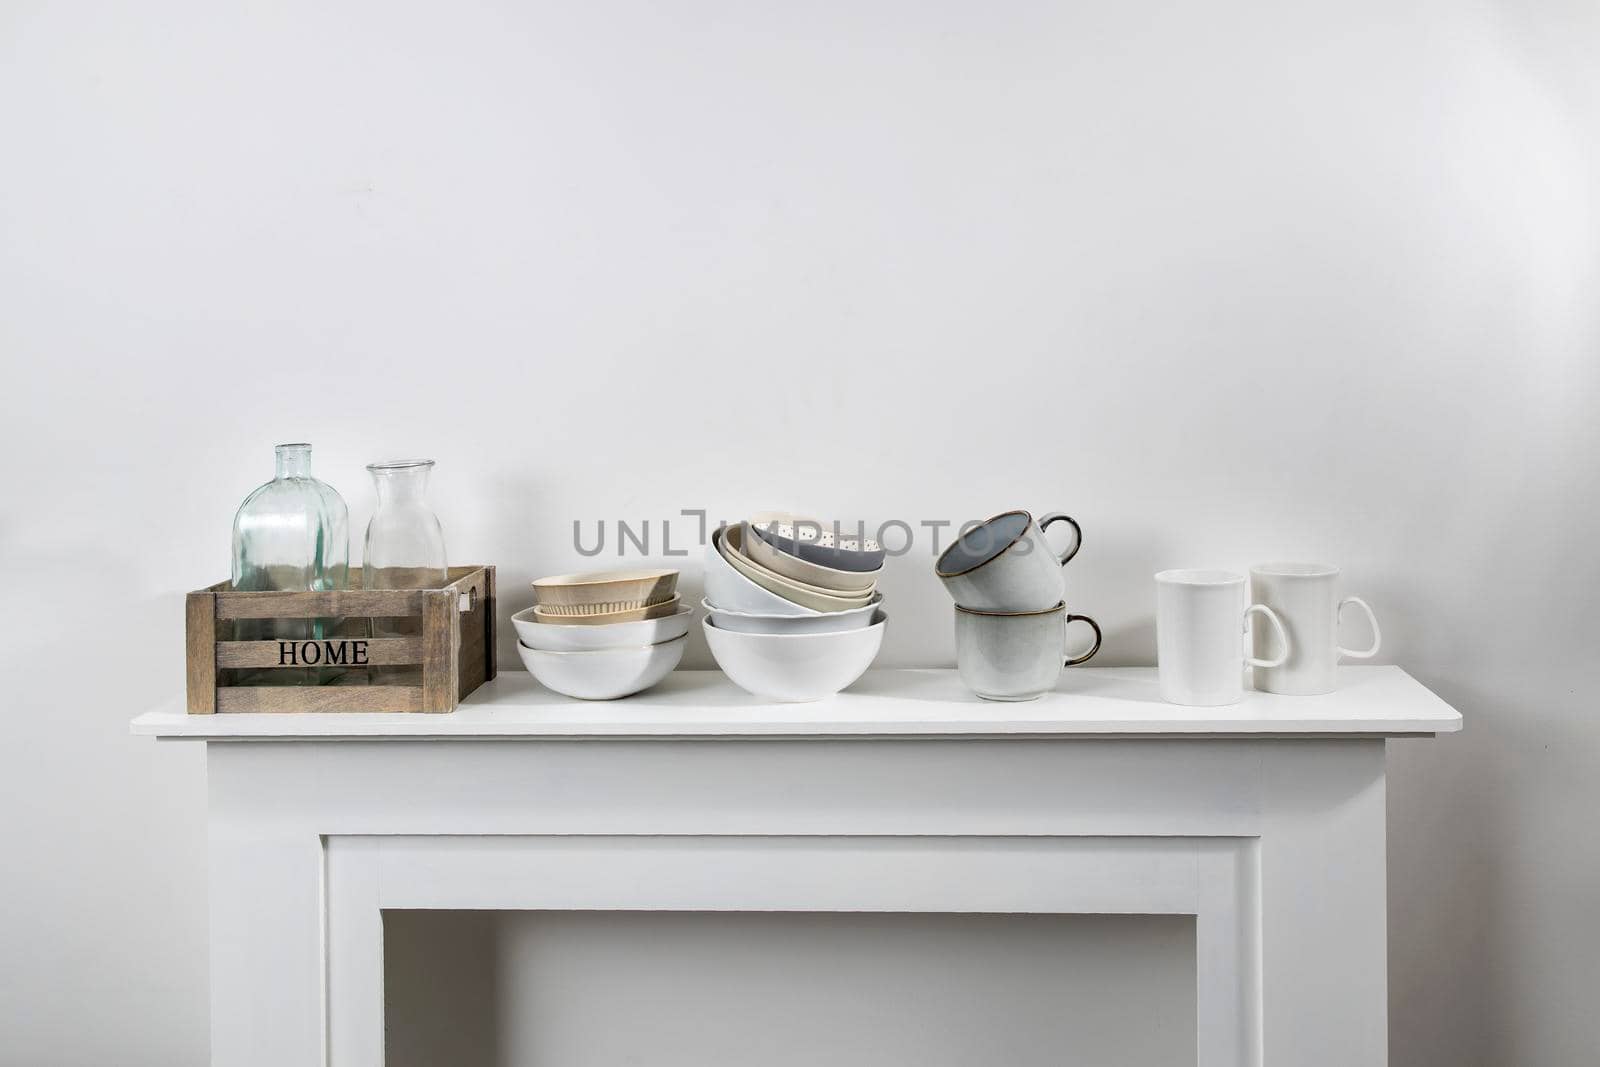 kitchen utensils, cups, bowls, bottles, storage items, artificial monstera in a ceramic pot are on a white dresser by elenarostunova